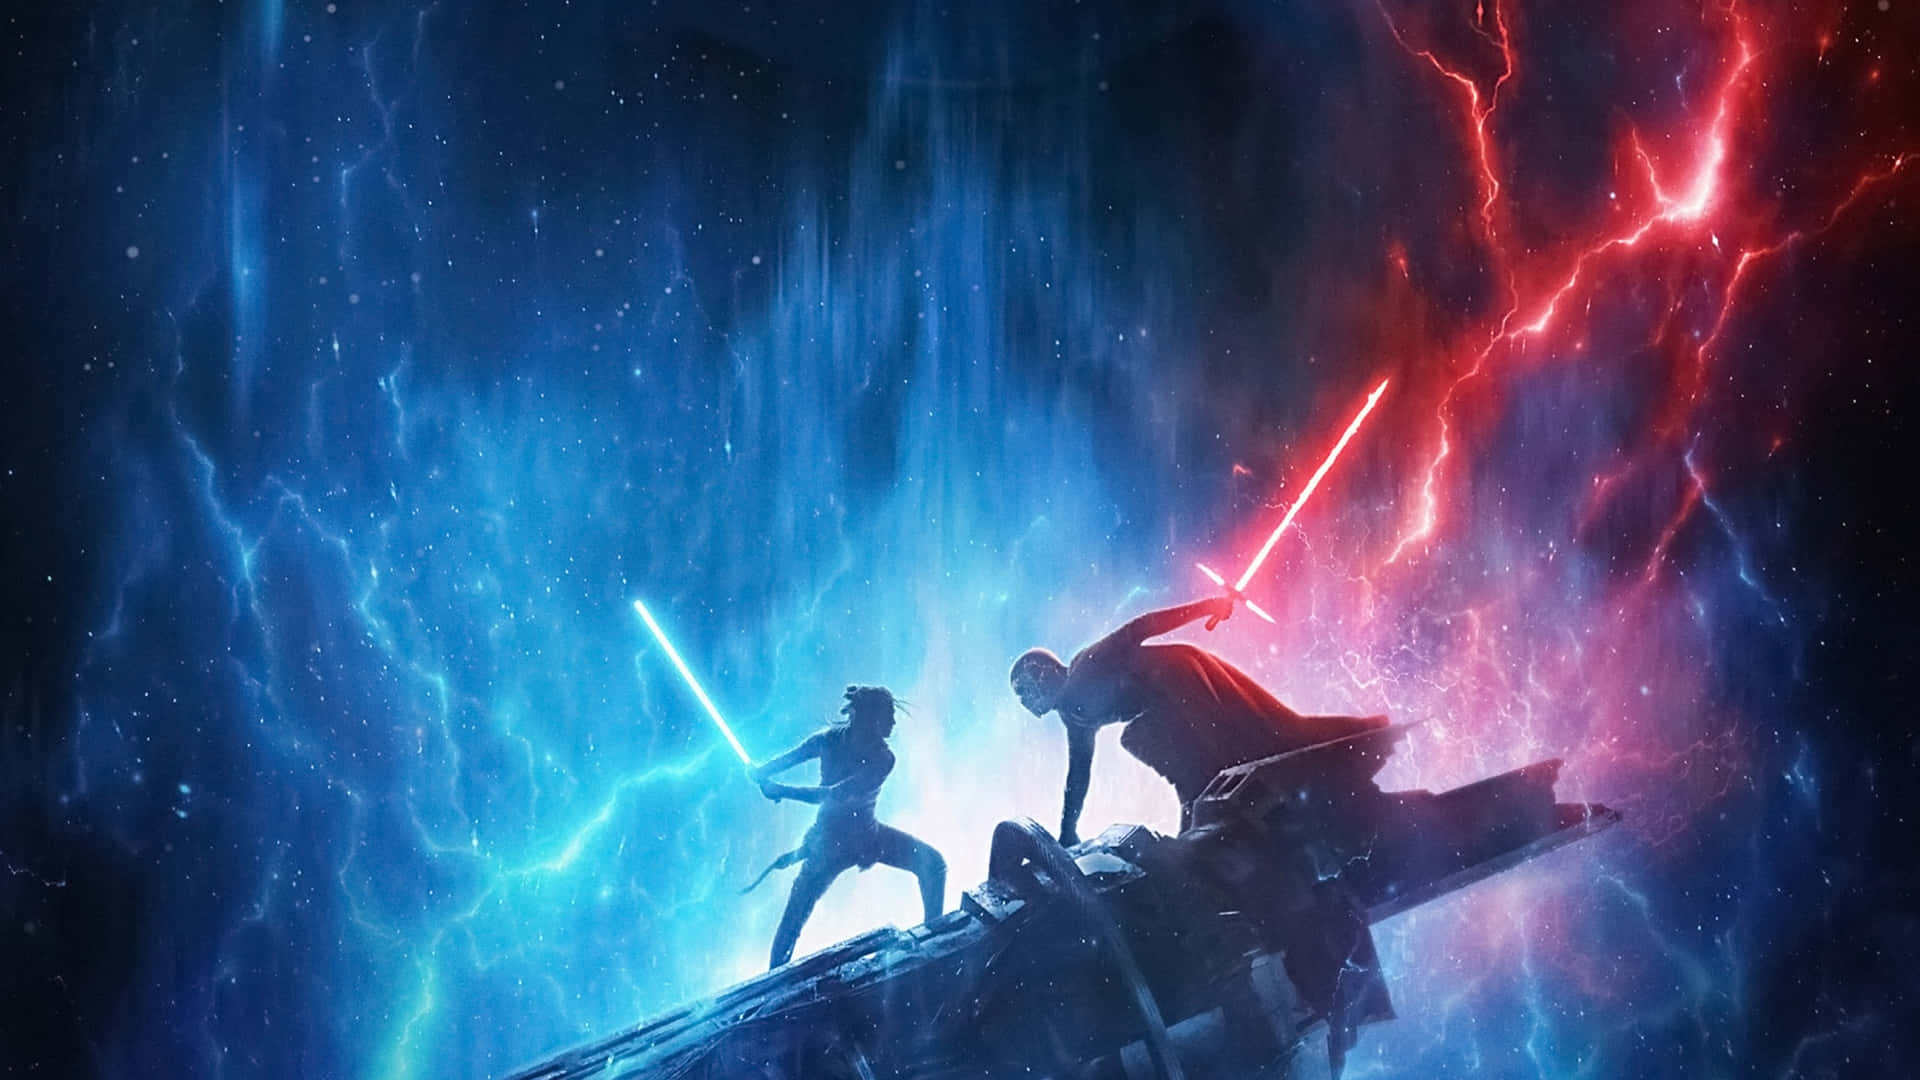 Star Wars Epic Lightsaber Duel Ultra Wide Wallpaper